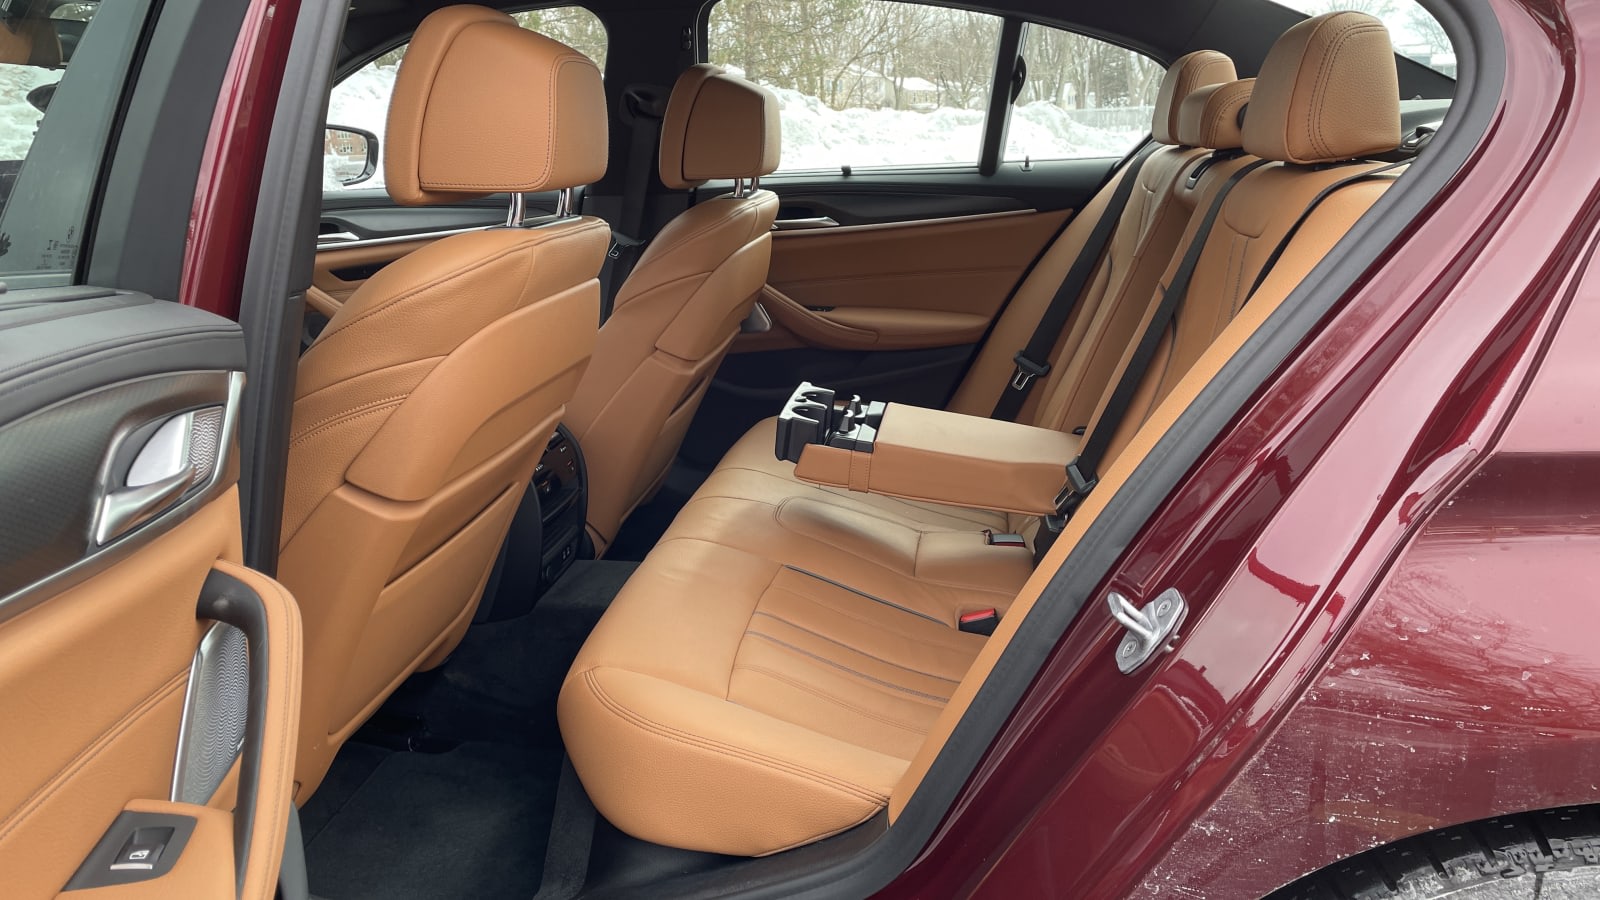 BMW 523i interior - Seats